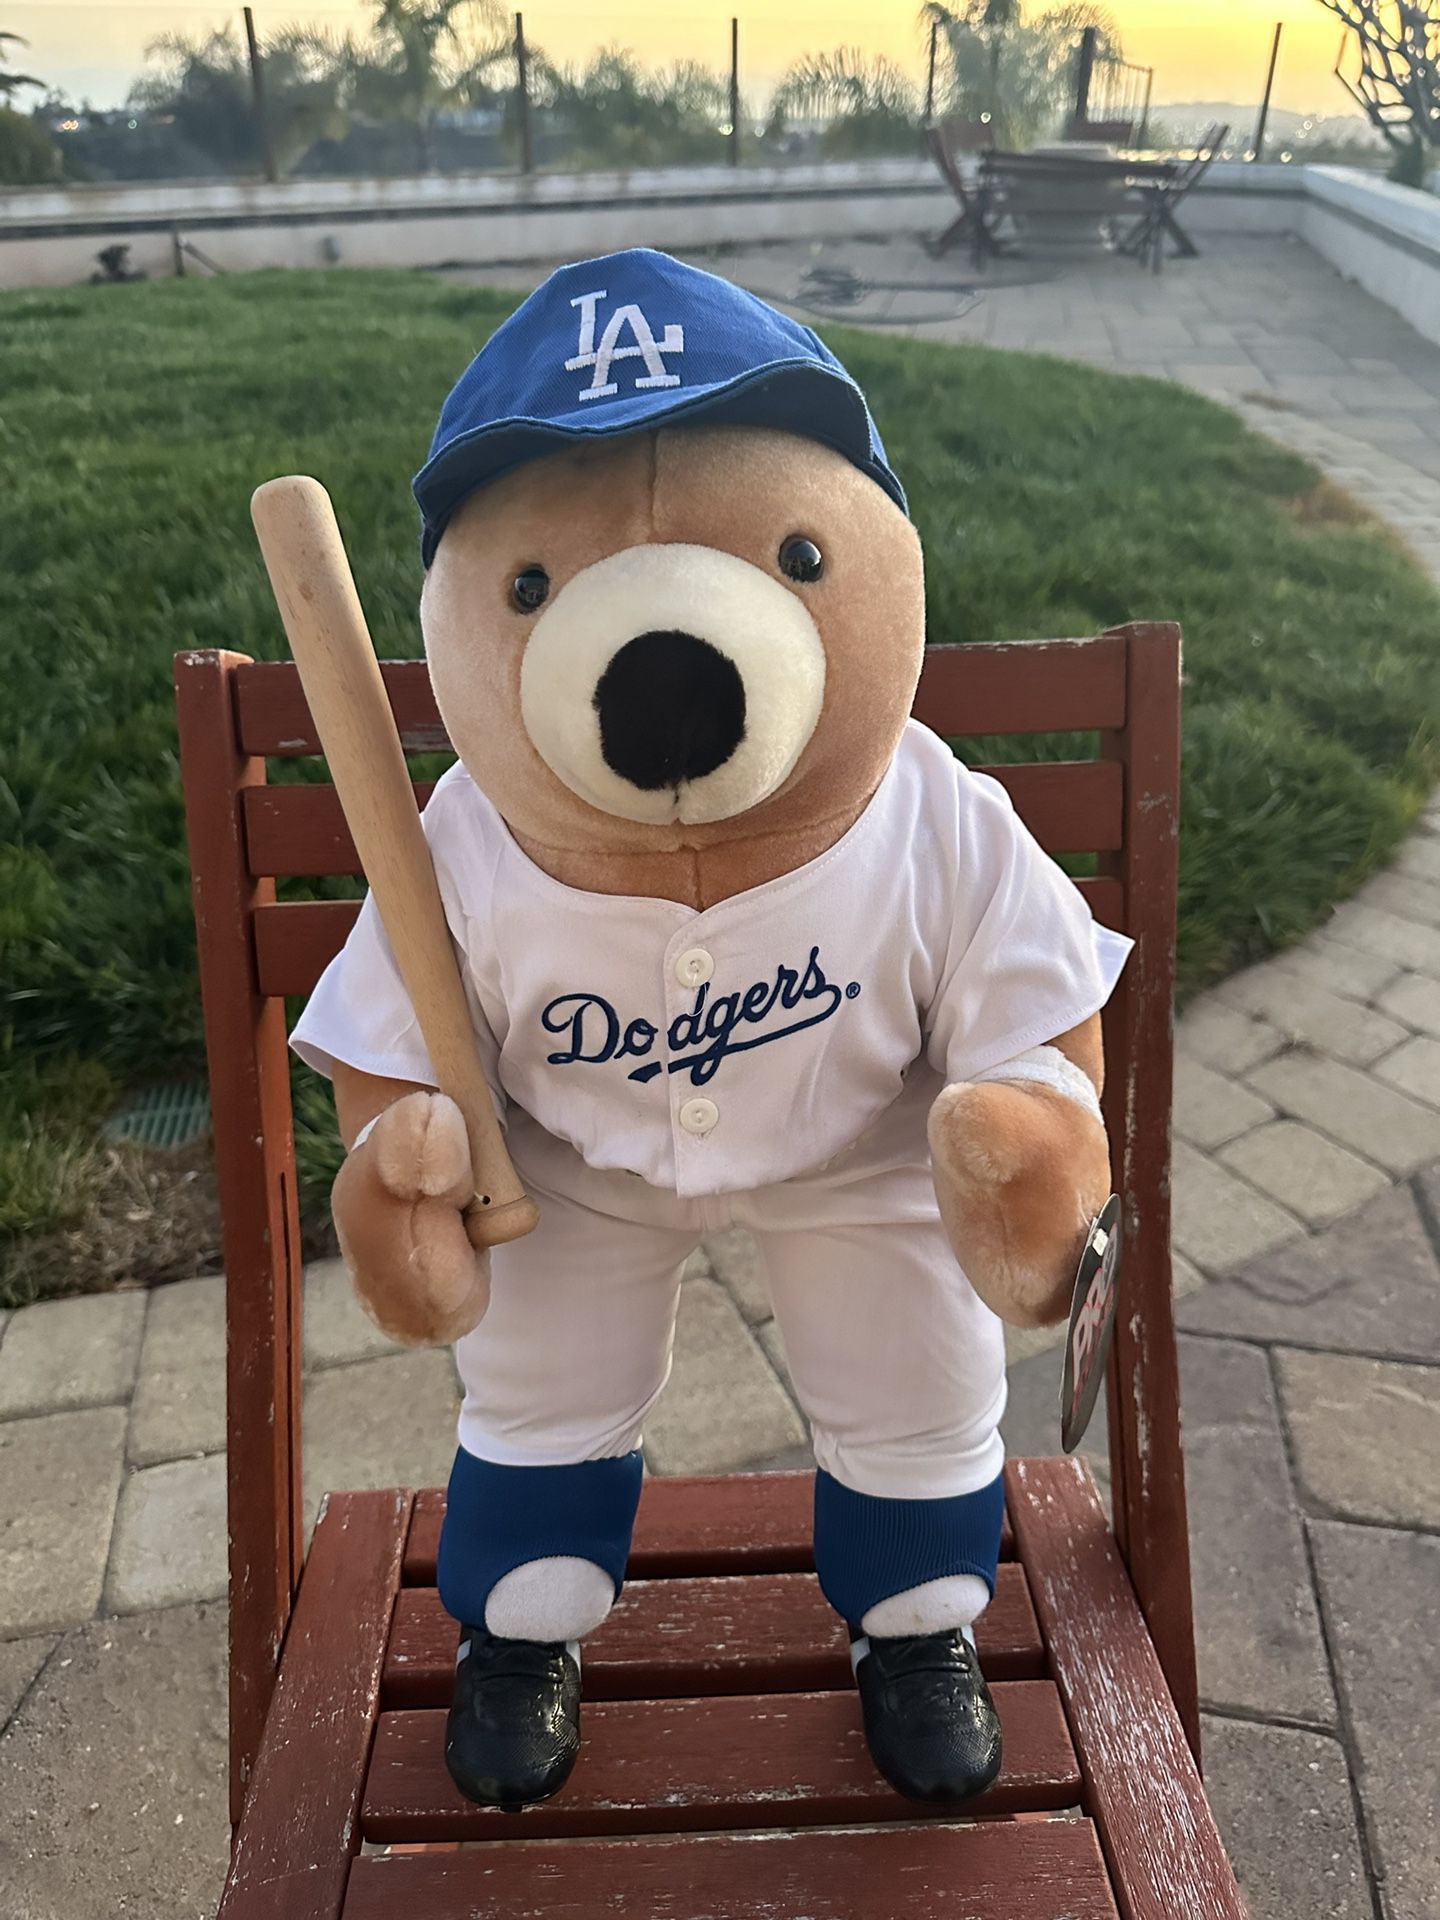 LA Dodgers Rare Pro Bear Inc. Collectible Baseball Team Teddy Bear.